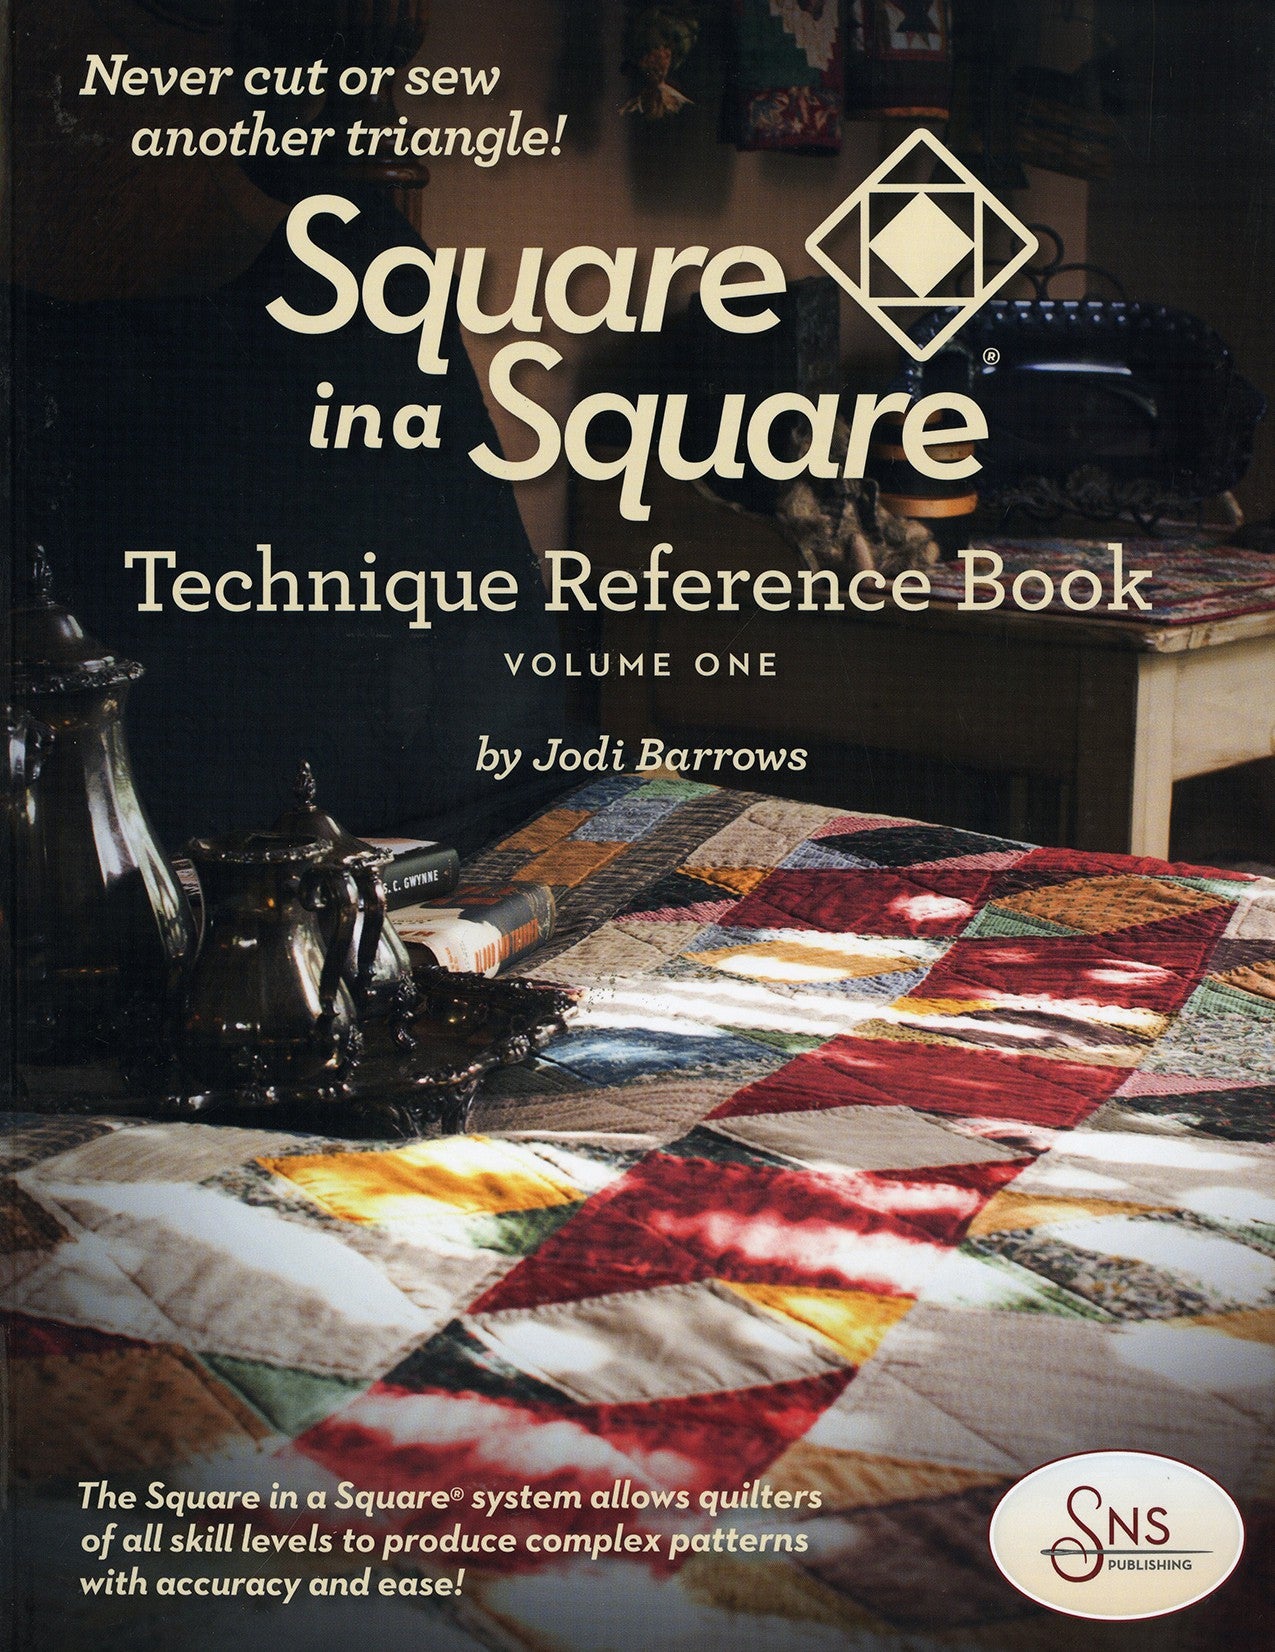 Square In A Square Technique Quilt Reference Book Volume 1 by Jodi Barrows for Square in a Square